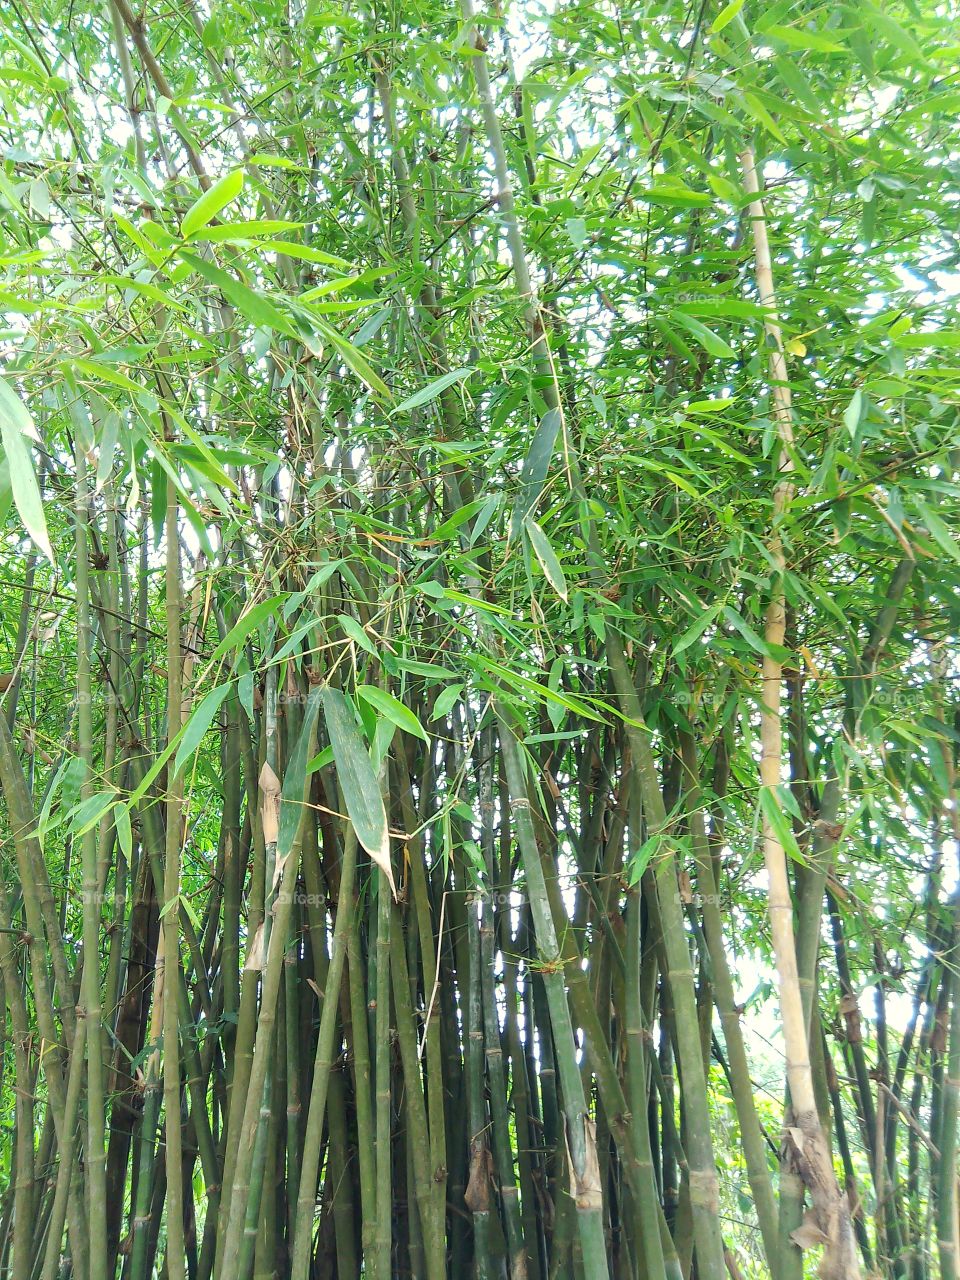 Fastest Growing Grass-Bamboo